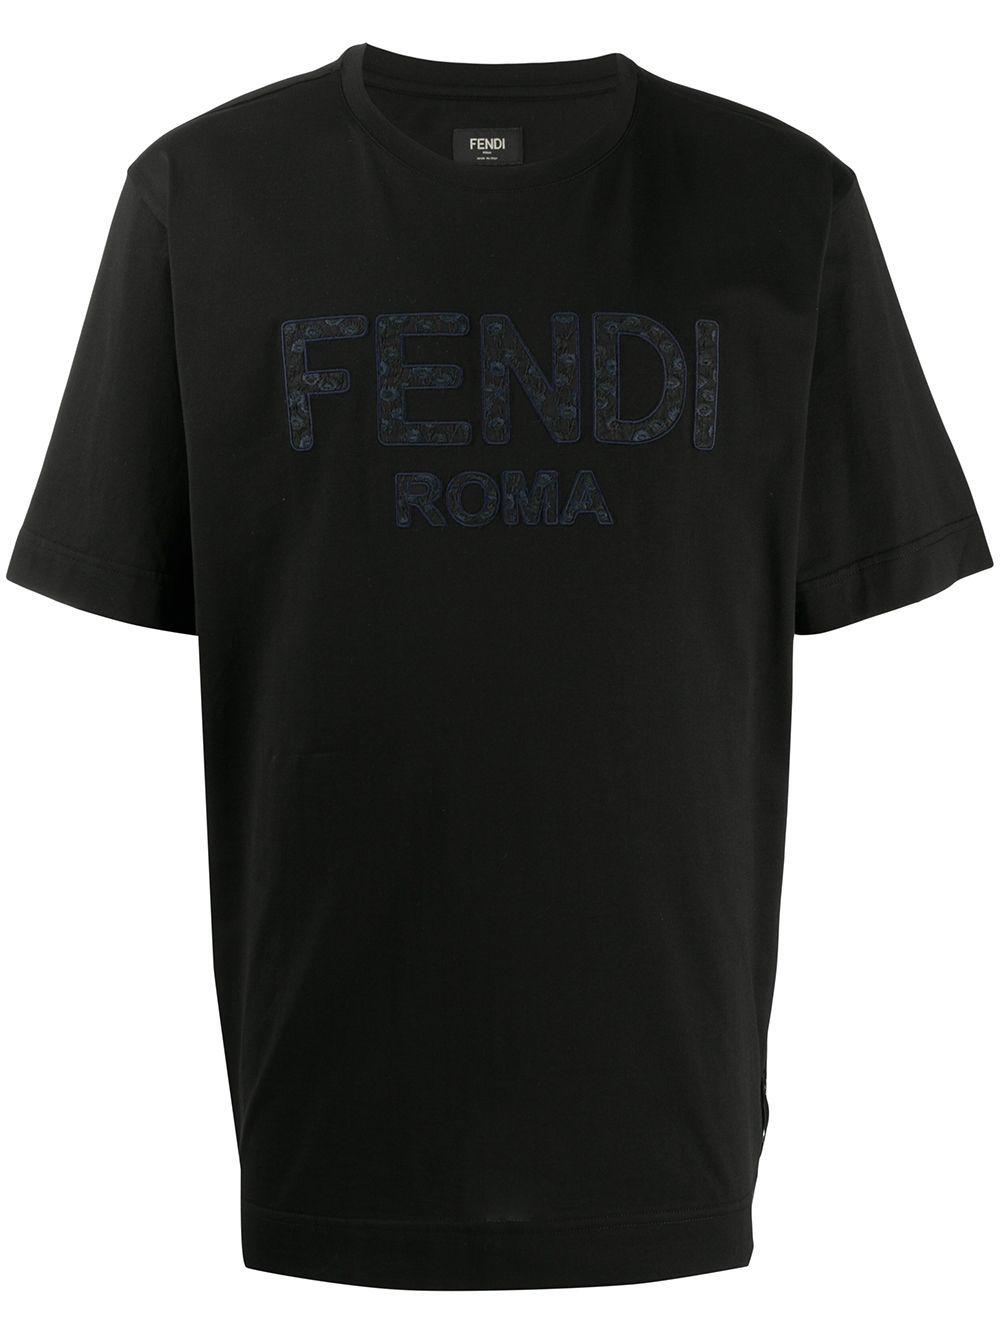 Fendi Cotton Roma Appliqué T-shirt in Black for Men - Lyst